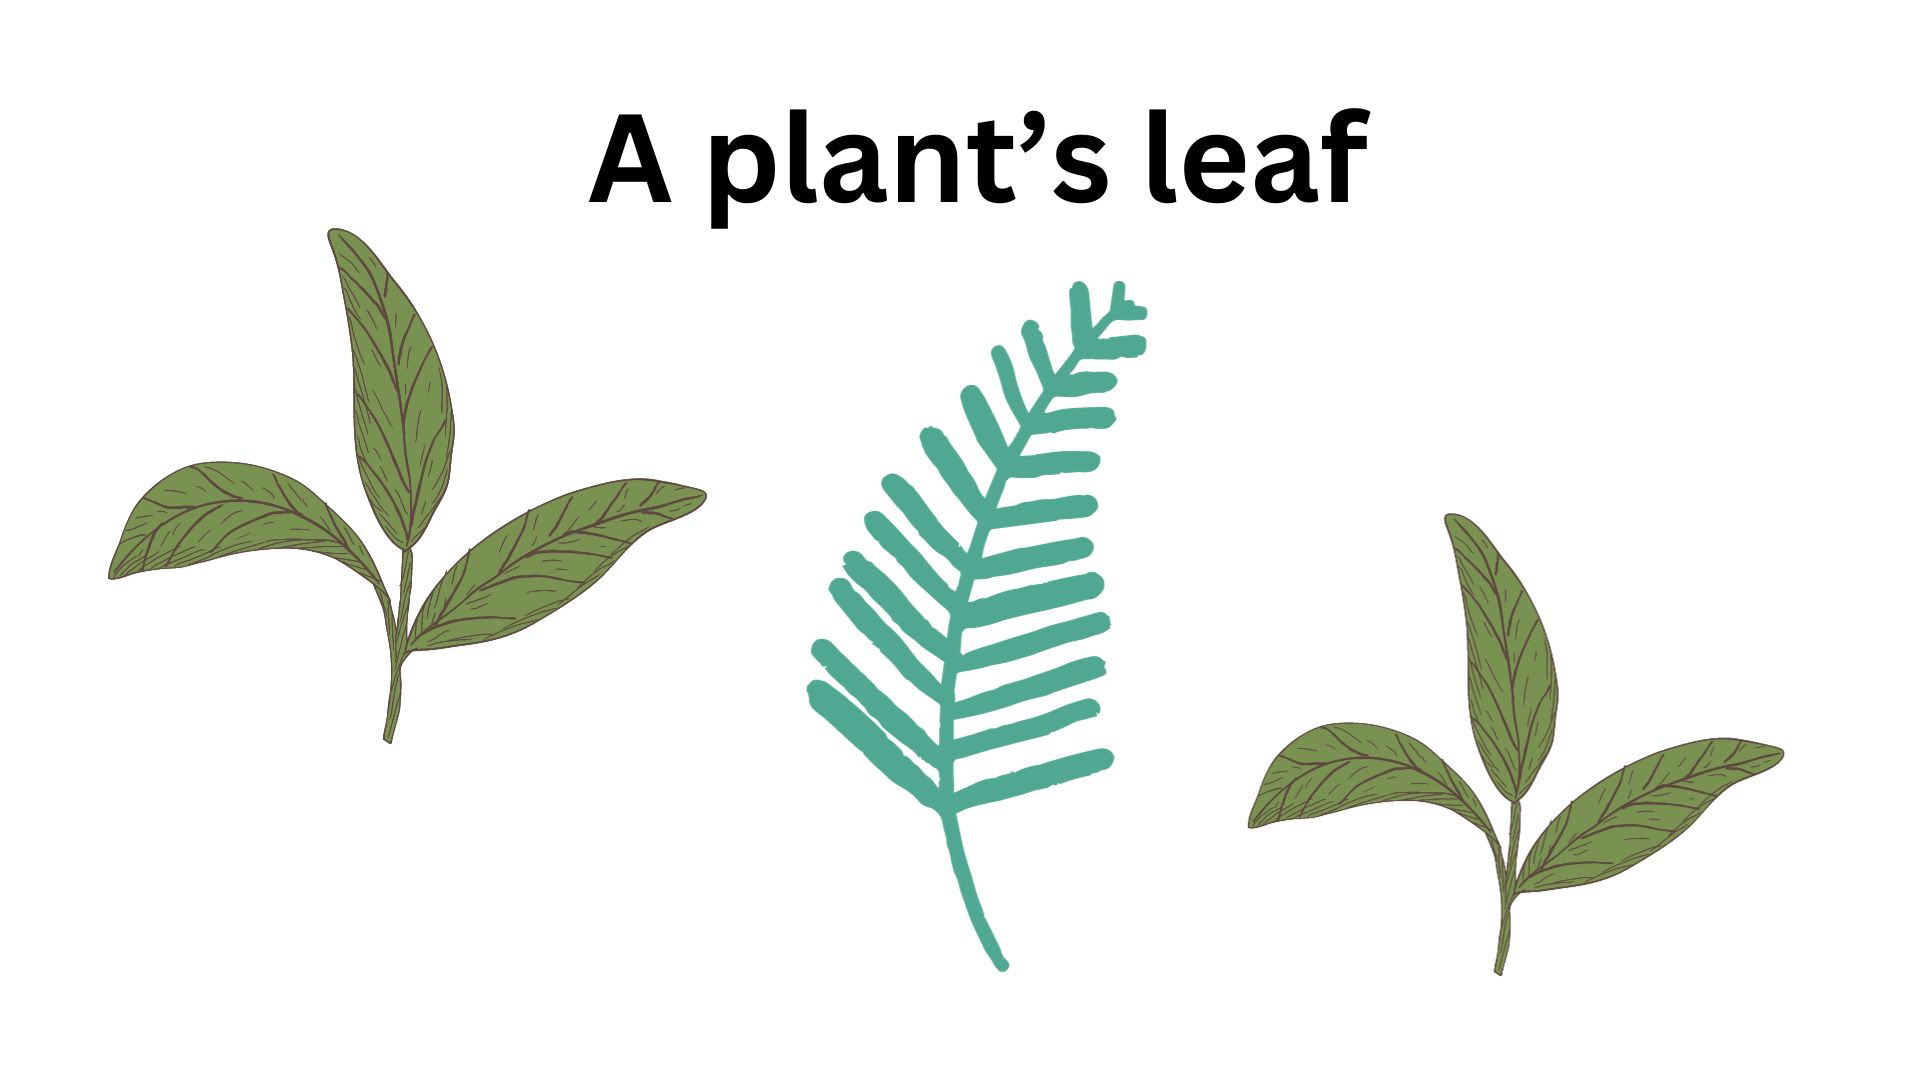 A plant’s leaf